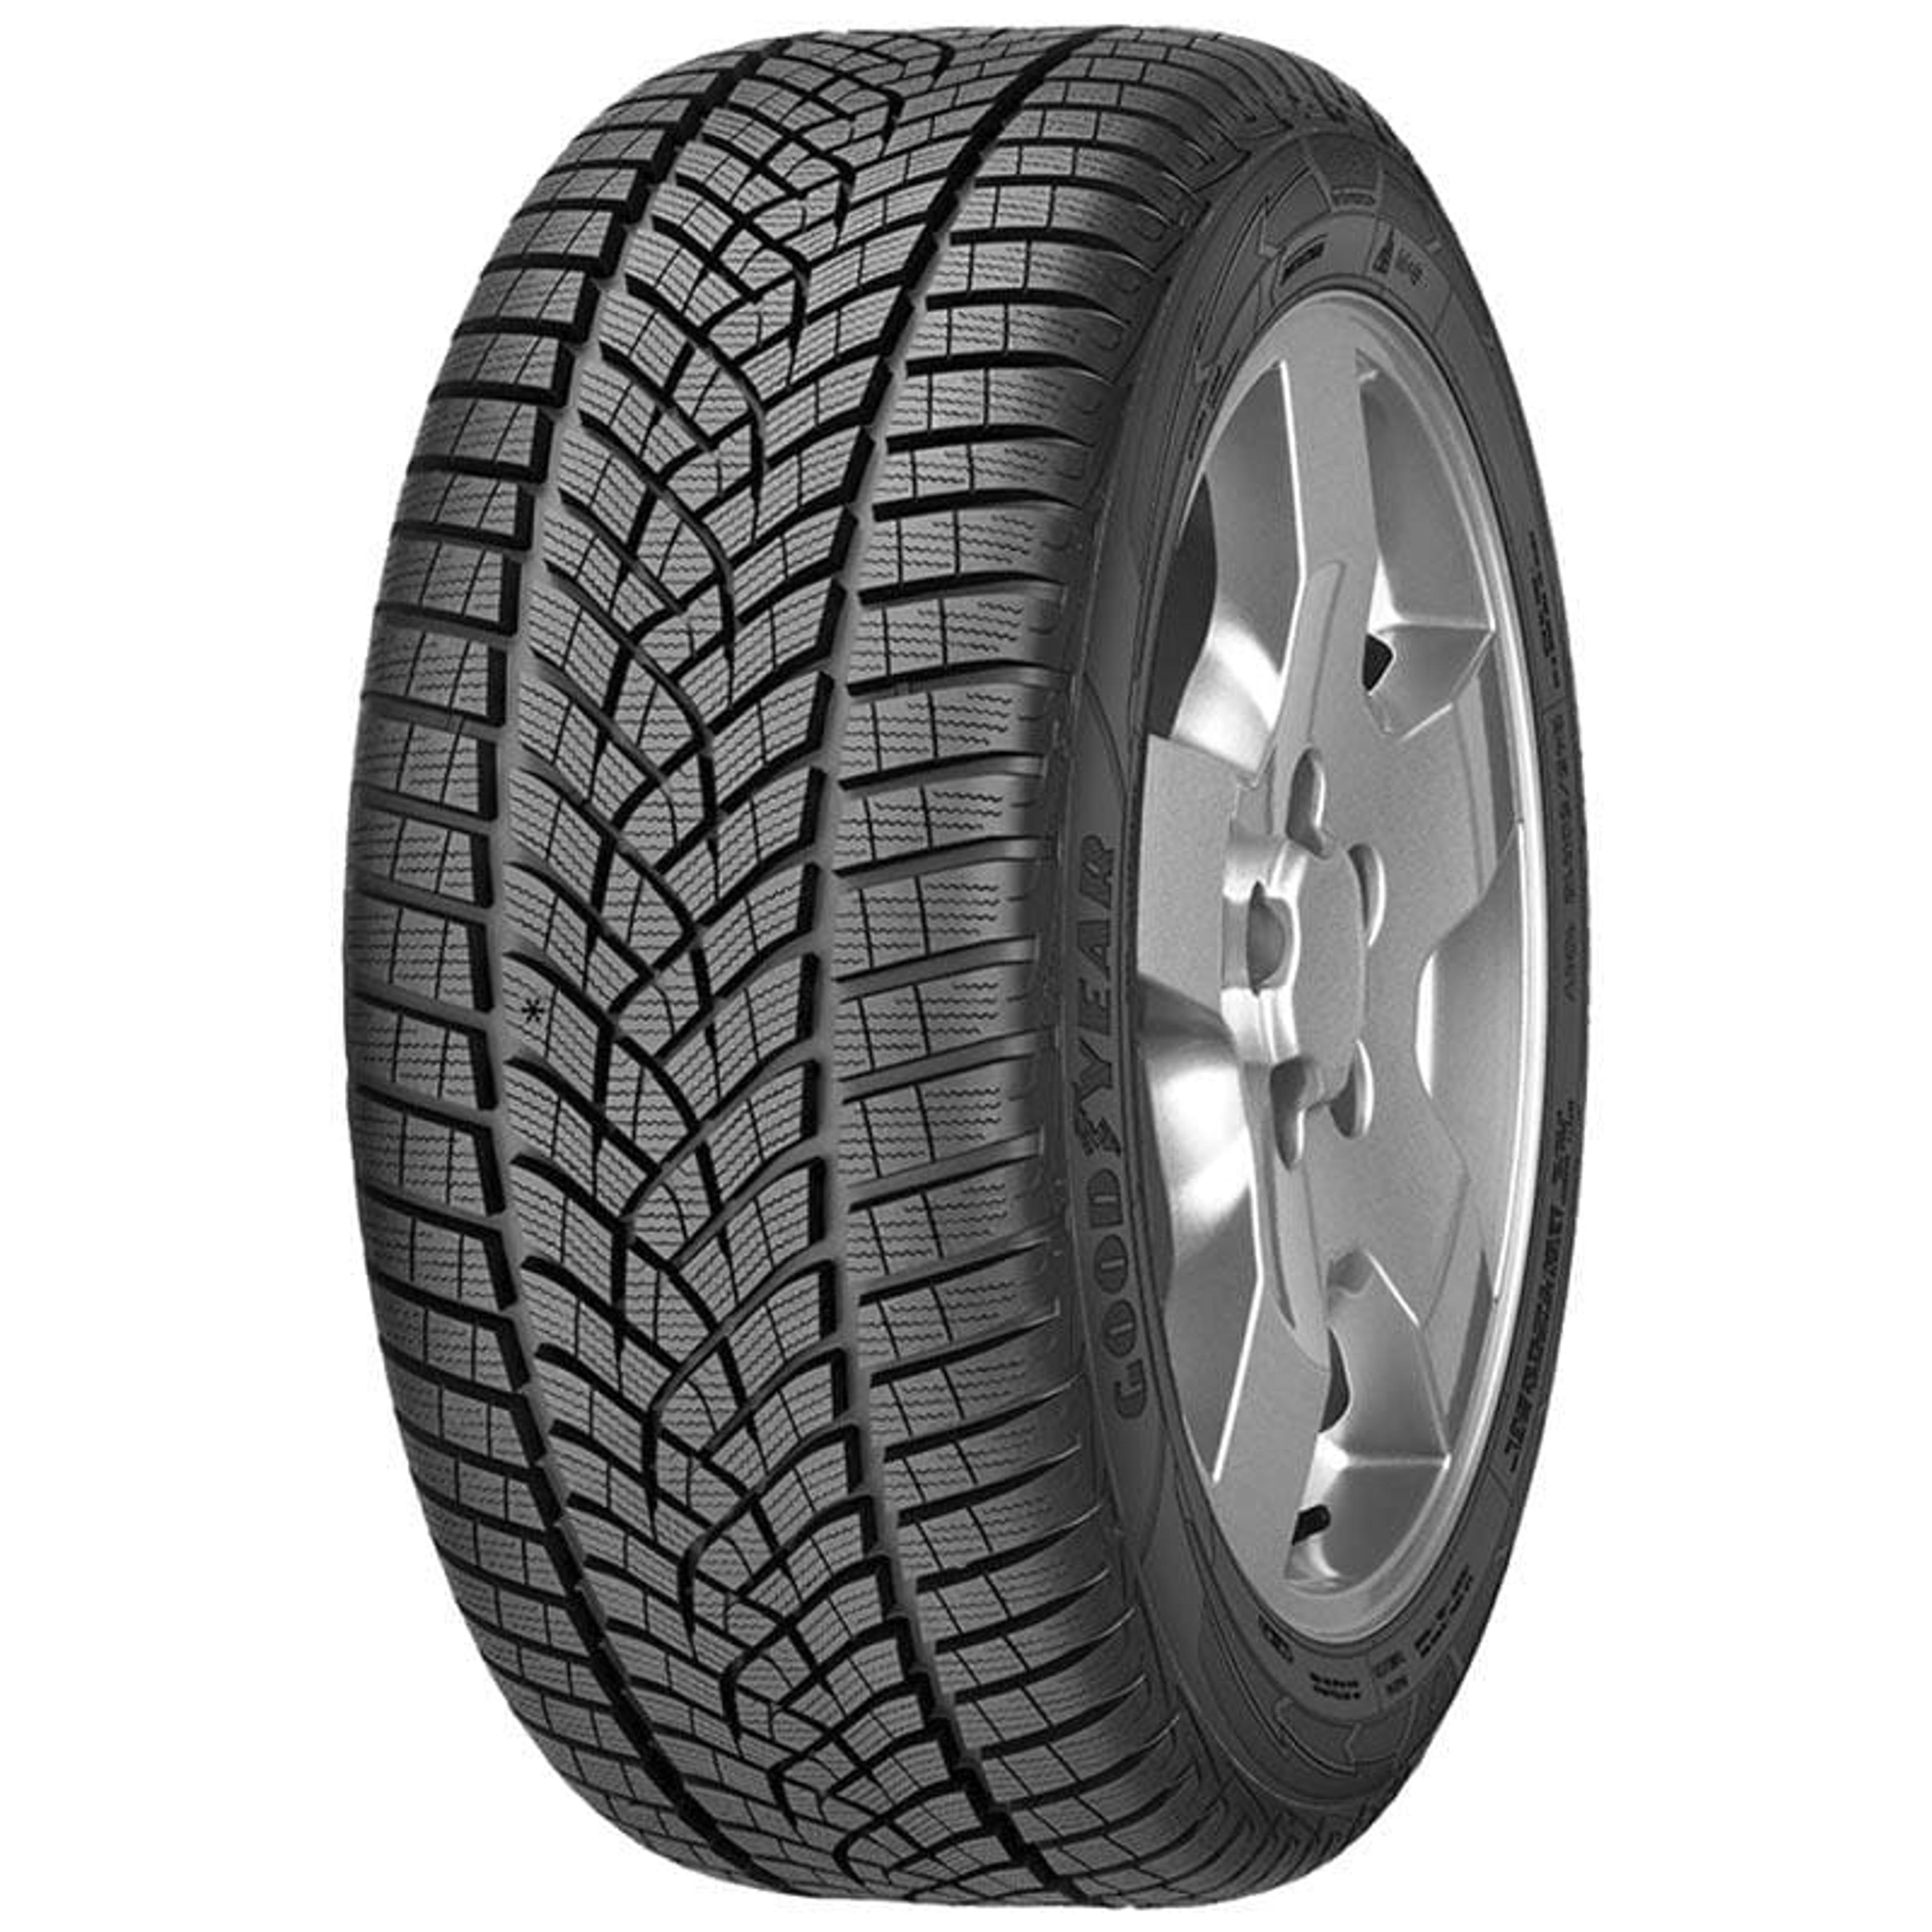 Grip | Performance Buy Ultra SimpleTire Tires Online Plus Goodyear